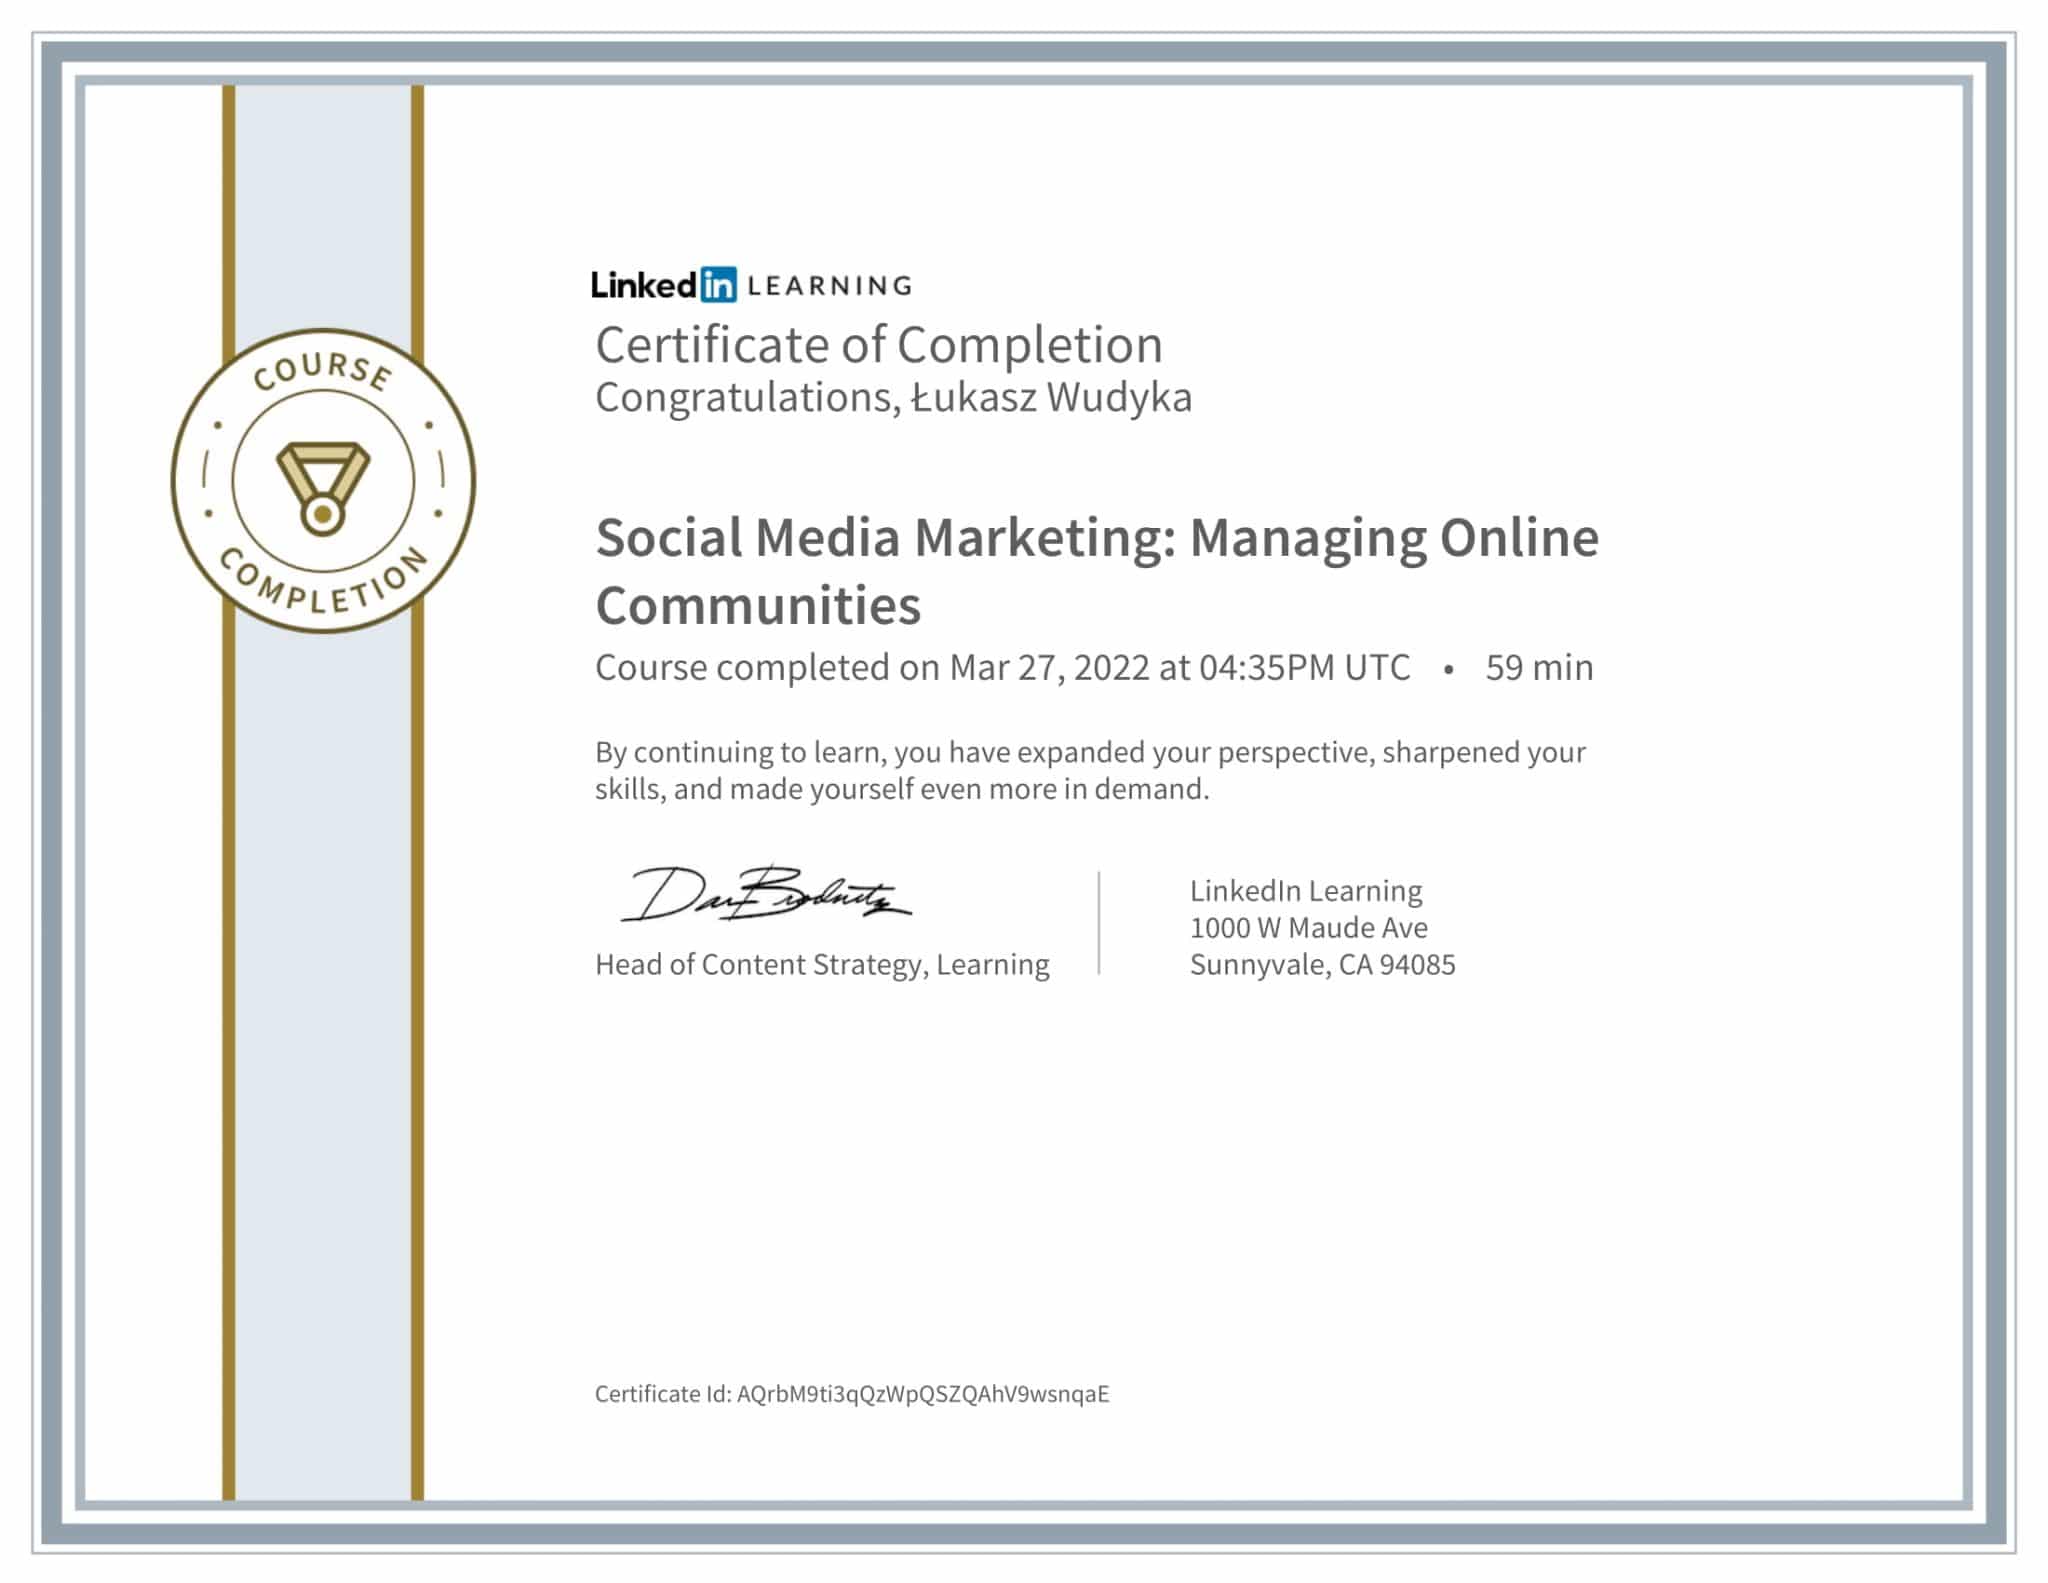 CertificateOfCompletion_Social Media Marketing Managing Online Communities-1